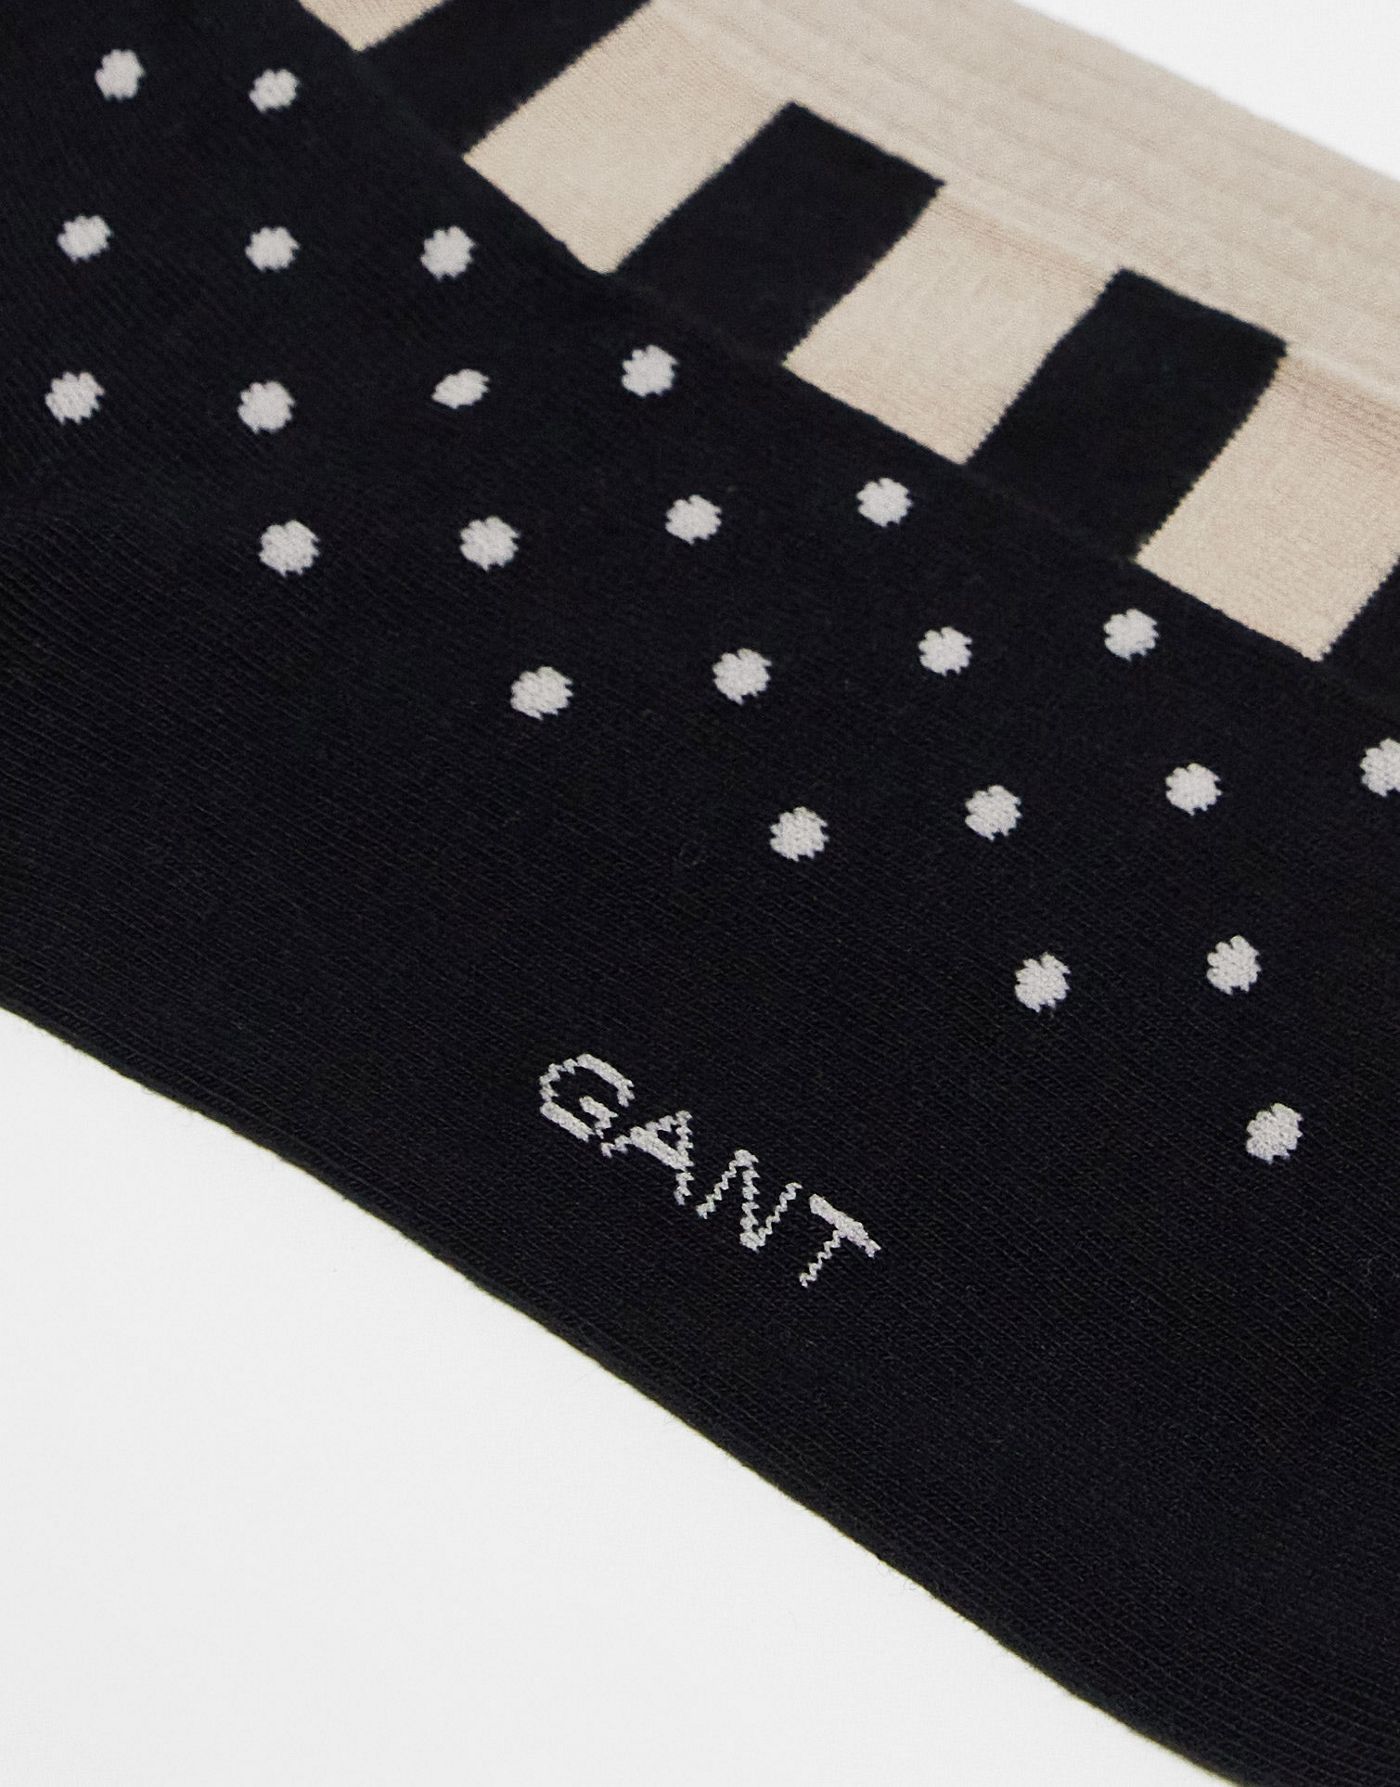 GANT 3 pack socks in cream polka dot and stripe with logo